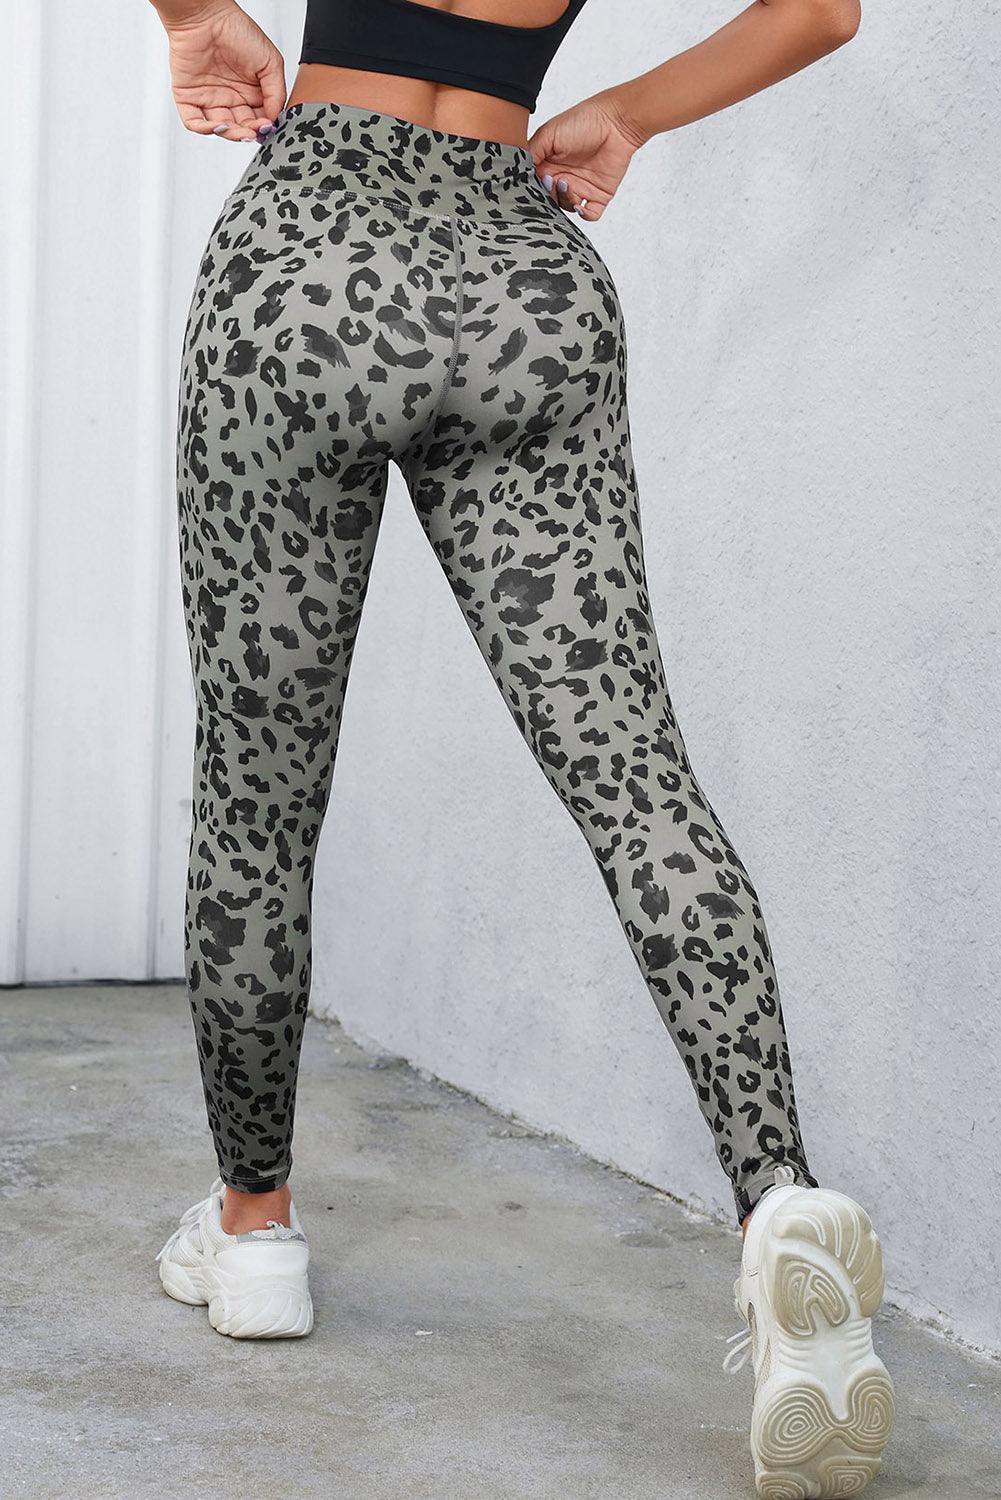 Get Wild High Waist Leopard Print Leggings - MXSTUDIO.COM